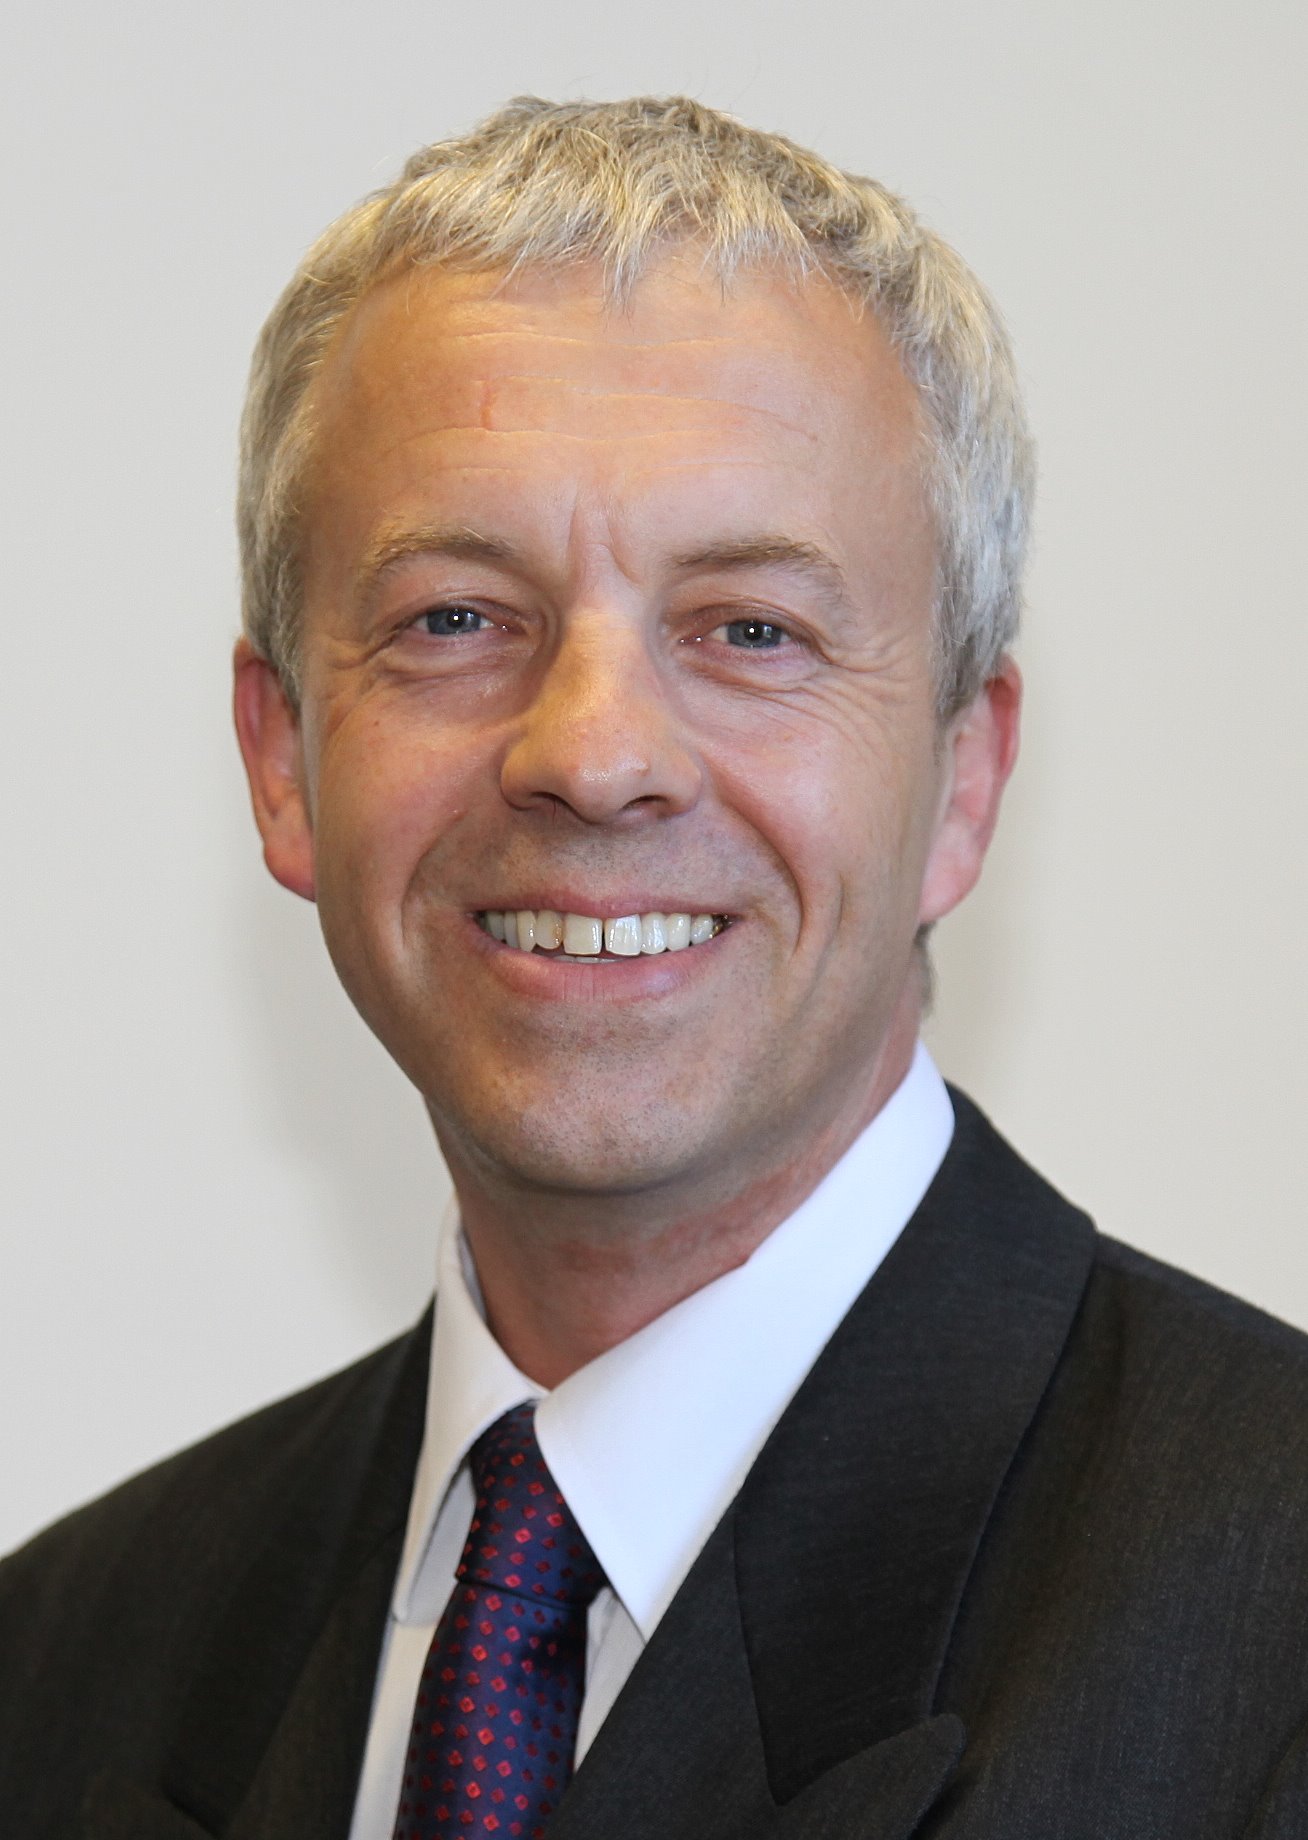 Profile image for Councillor Darren Cowell